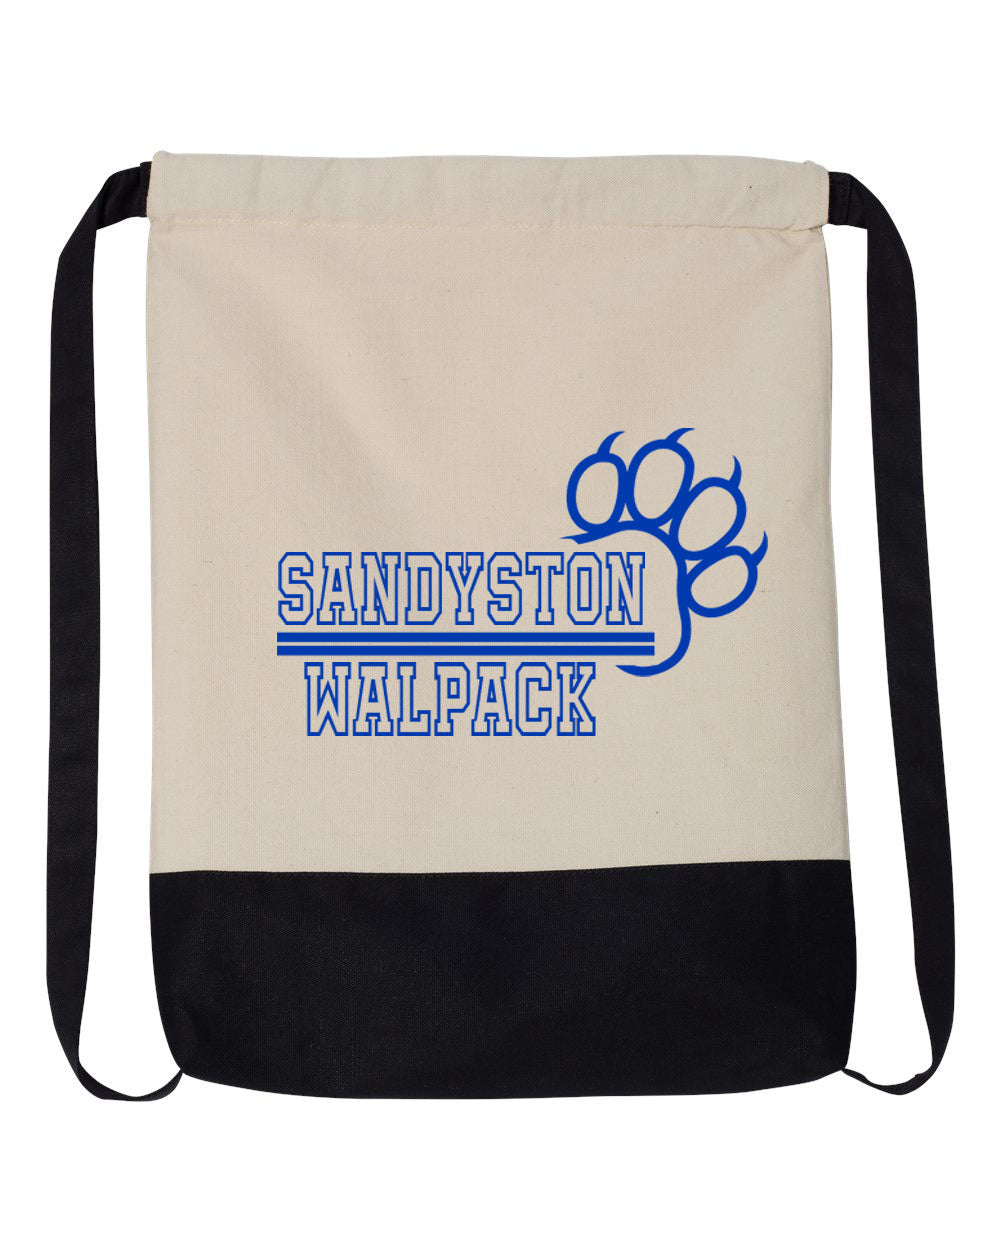 Sandyston Walpack design 16 Drawstring Bag